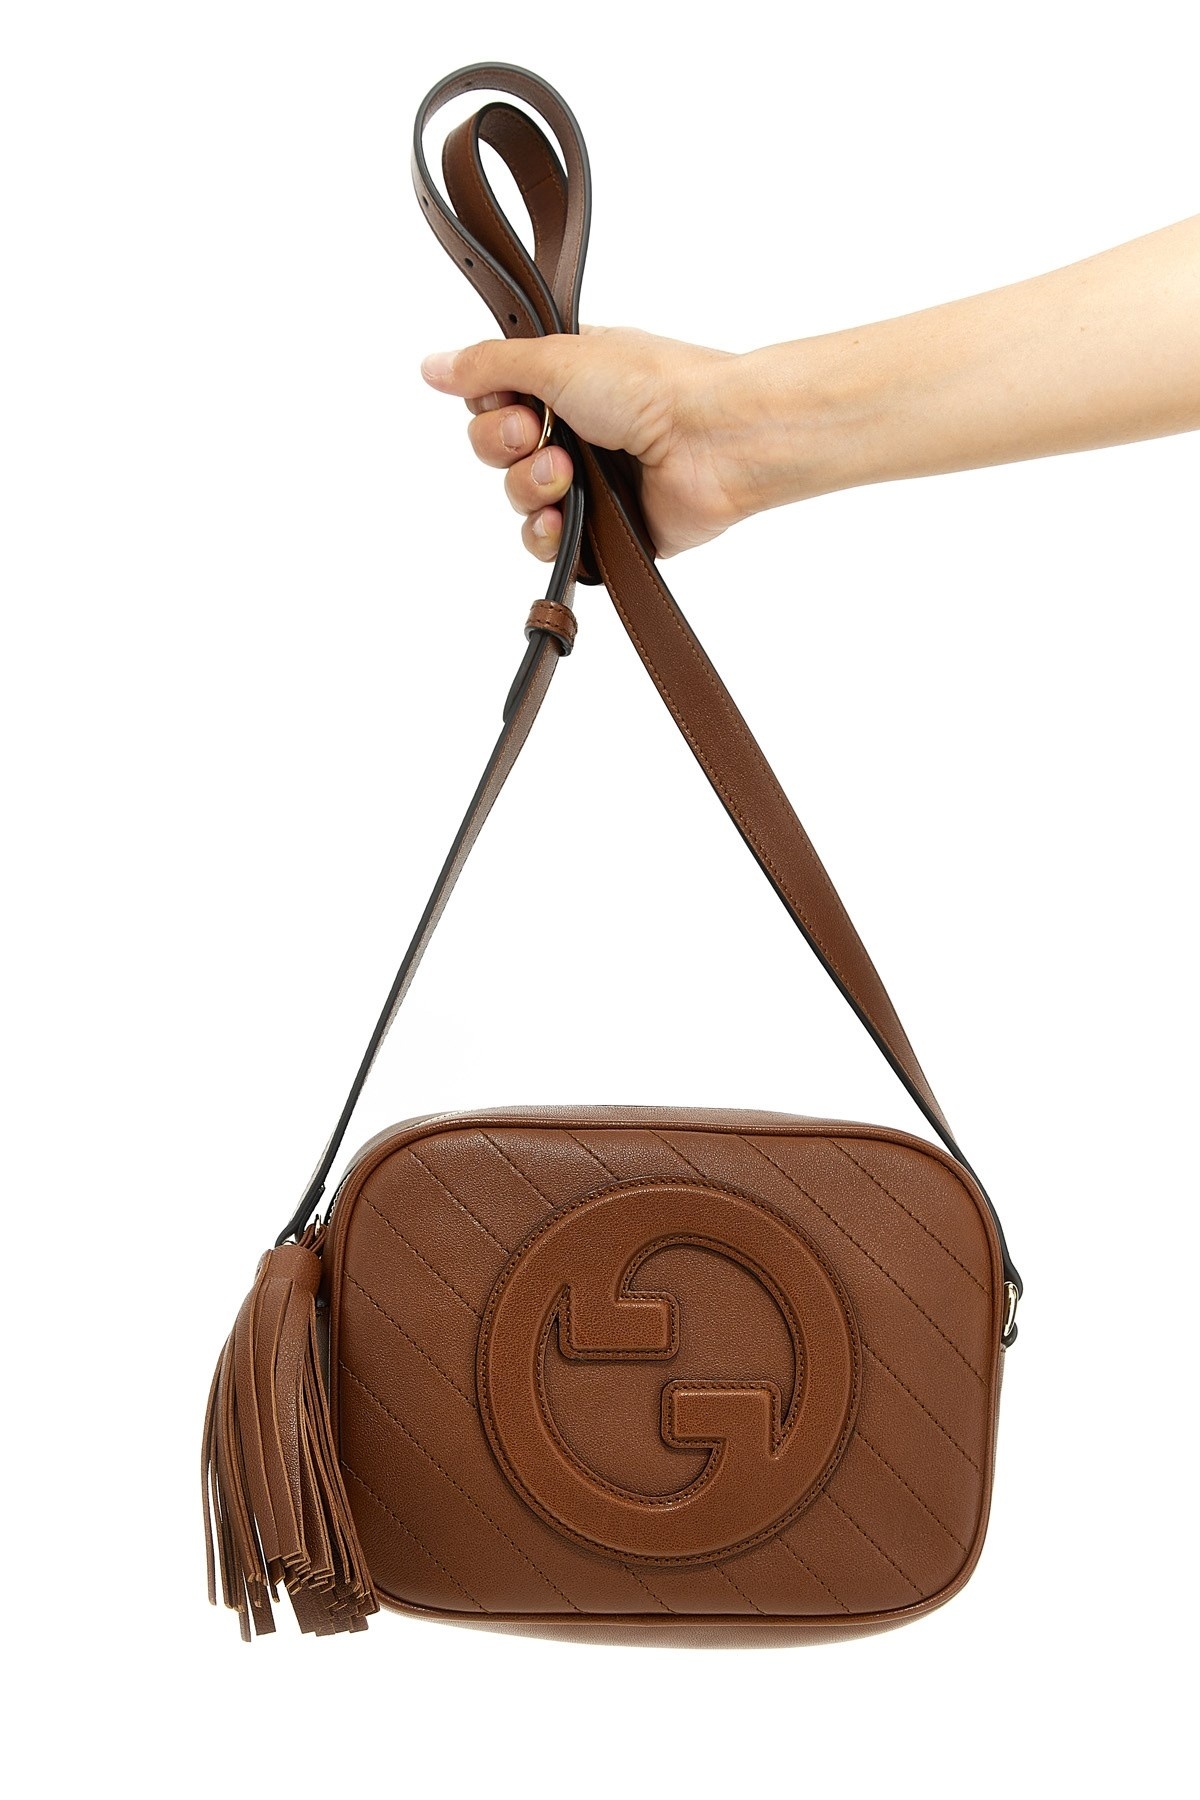 Gucci Blondie small crossbody bag - 2